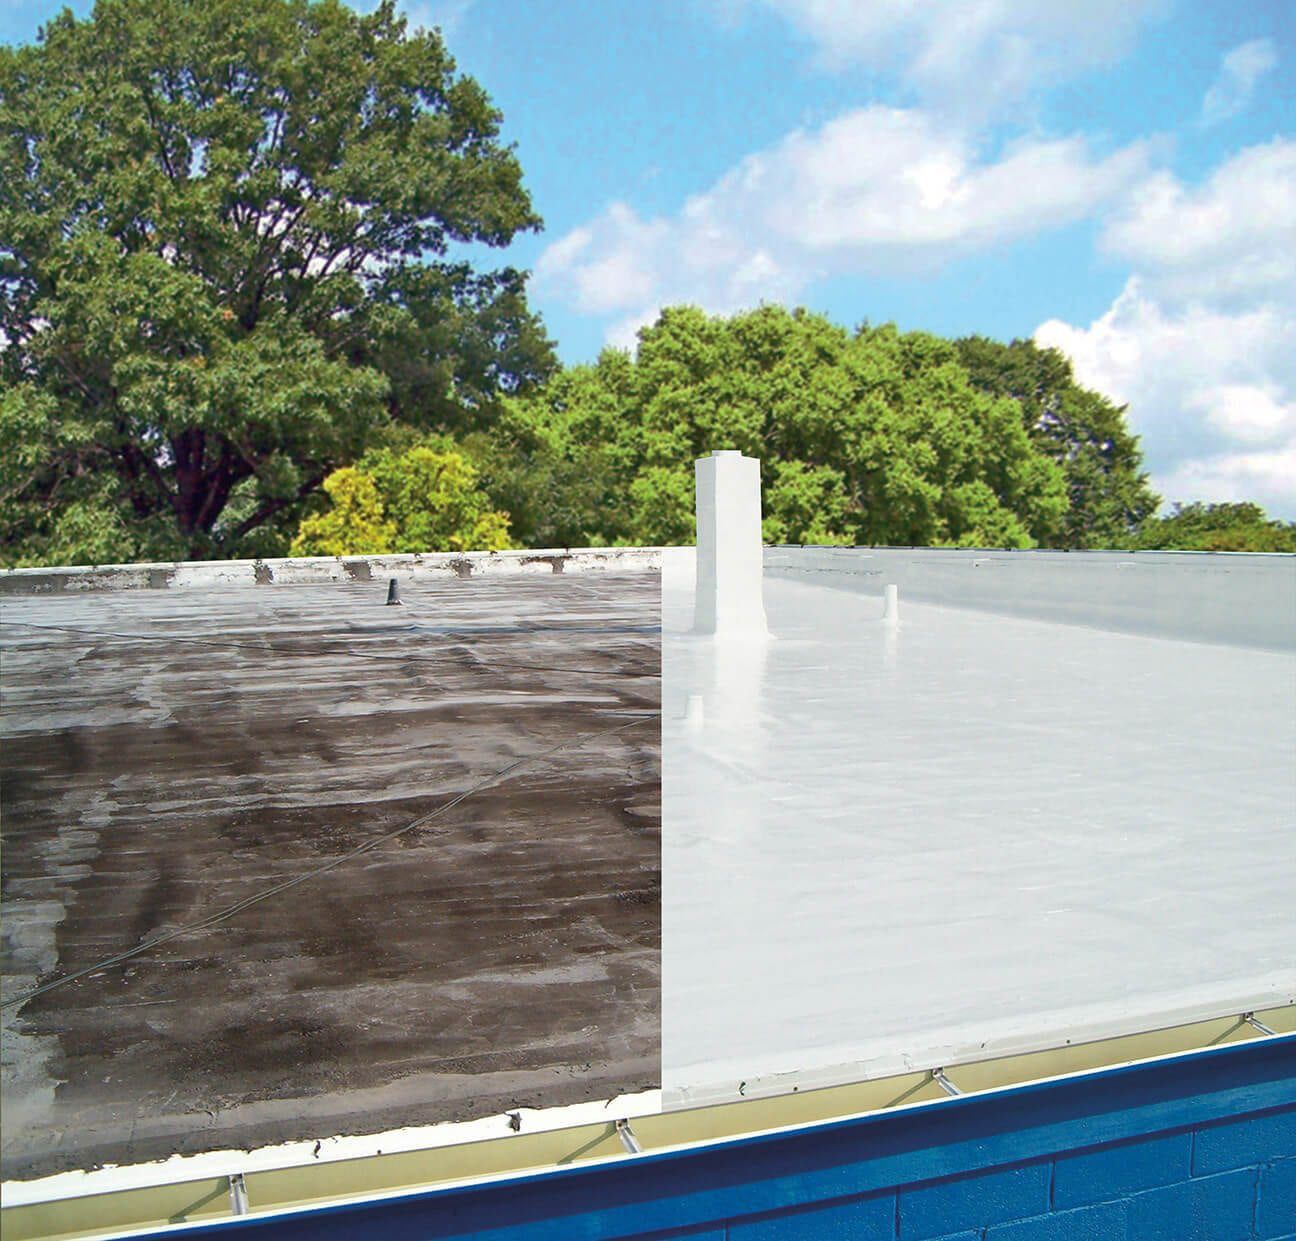 Roof cover # Waterproofing # Seal # Coat # Acrylic